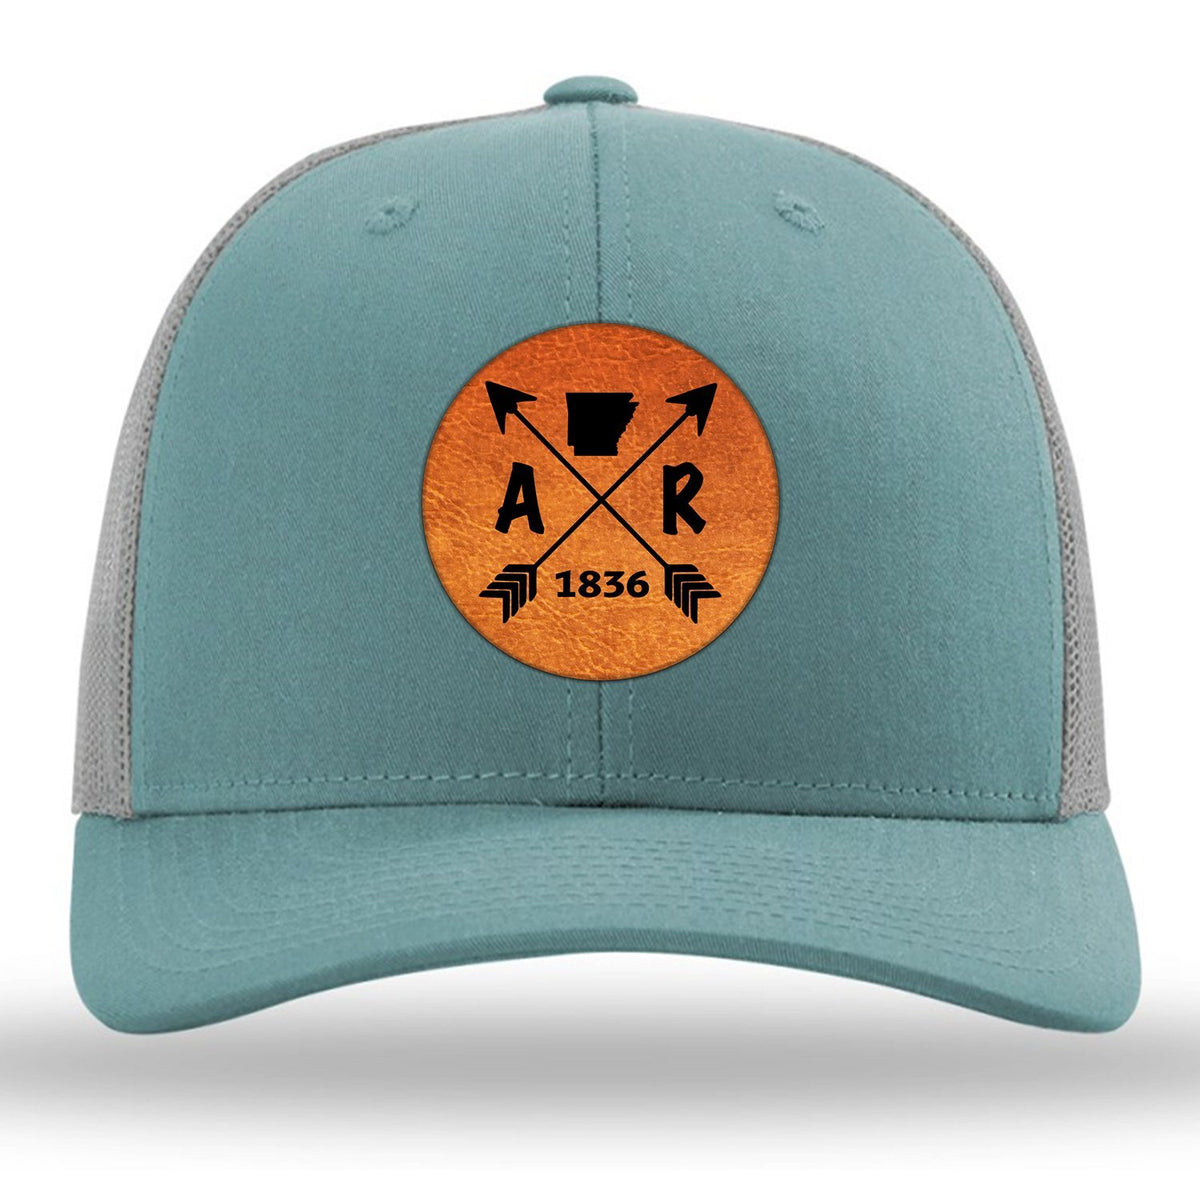 Arkansas State Arrows - Leather Patch Trucker Hat